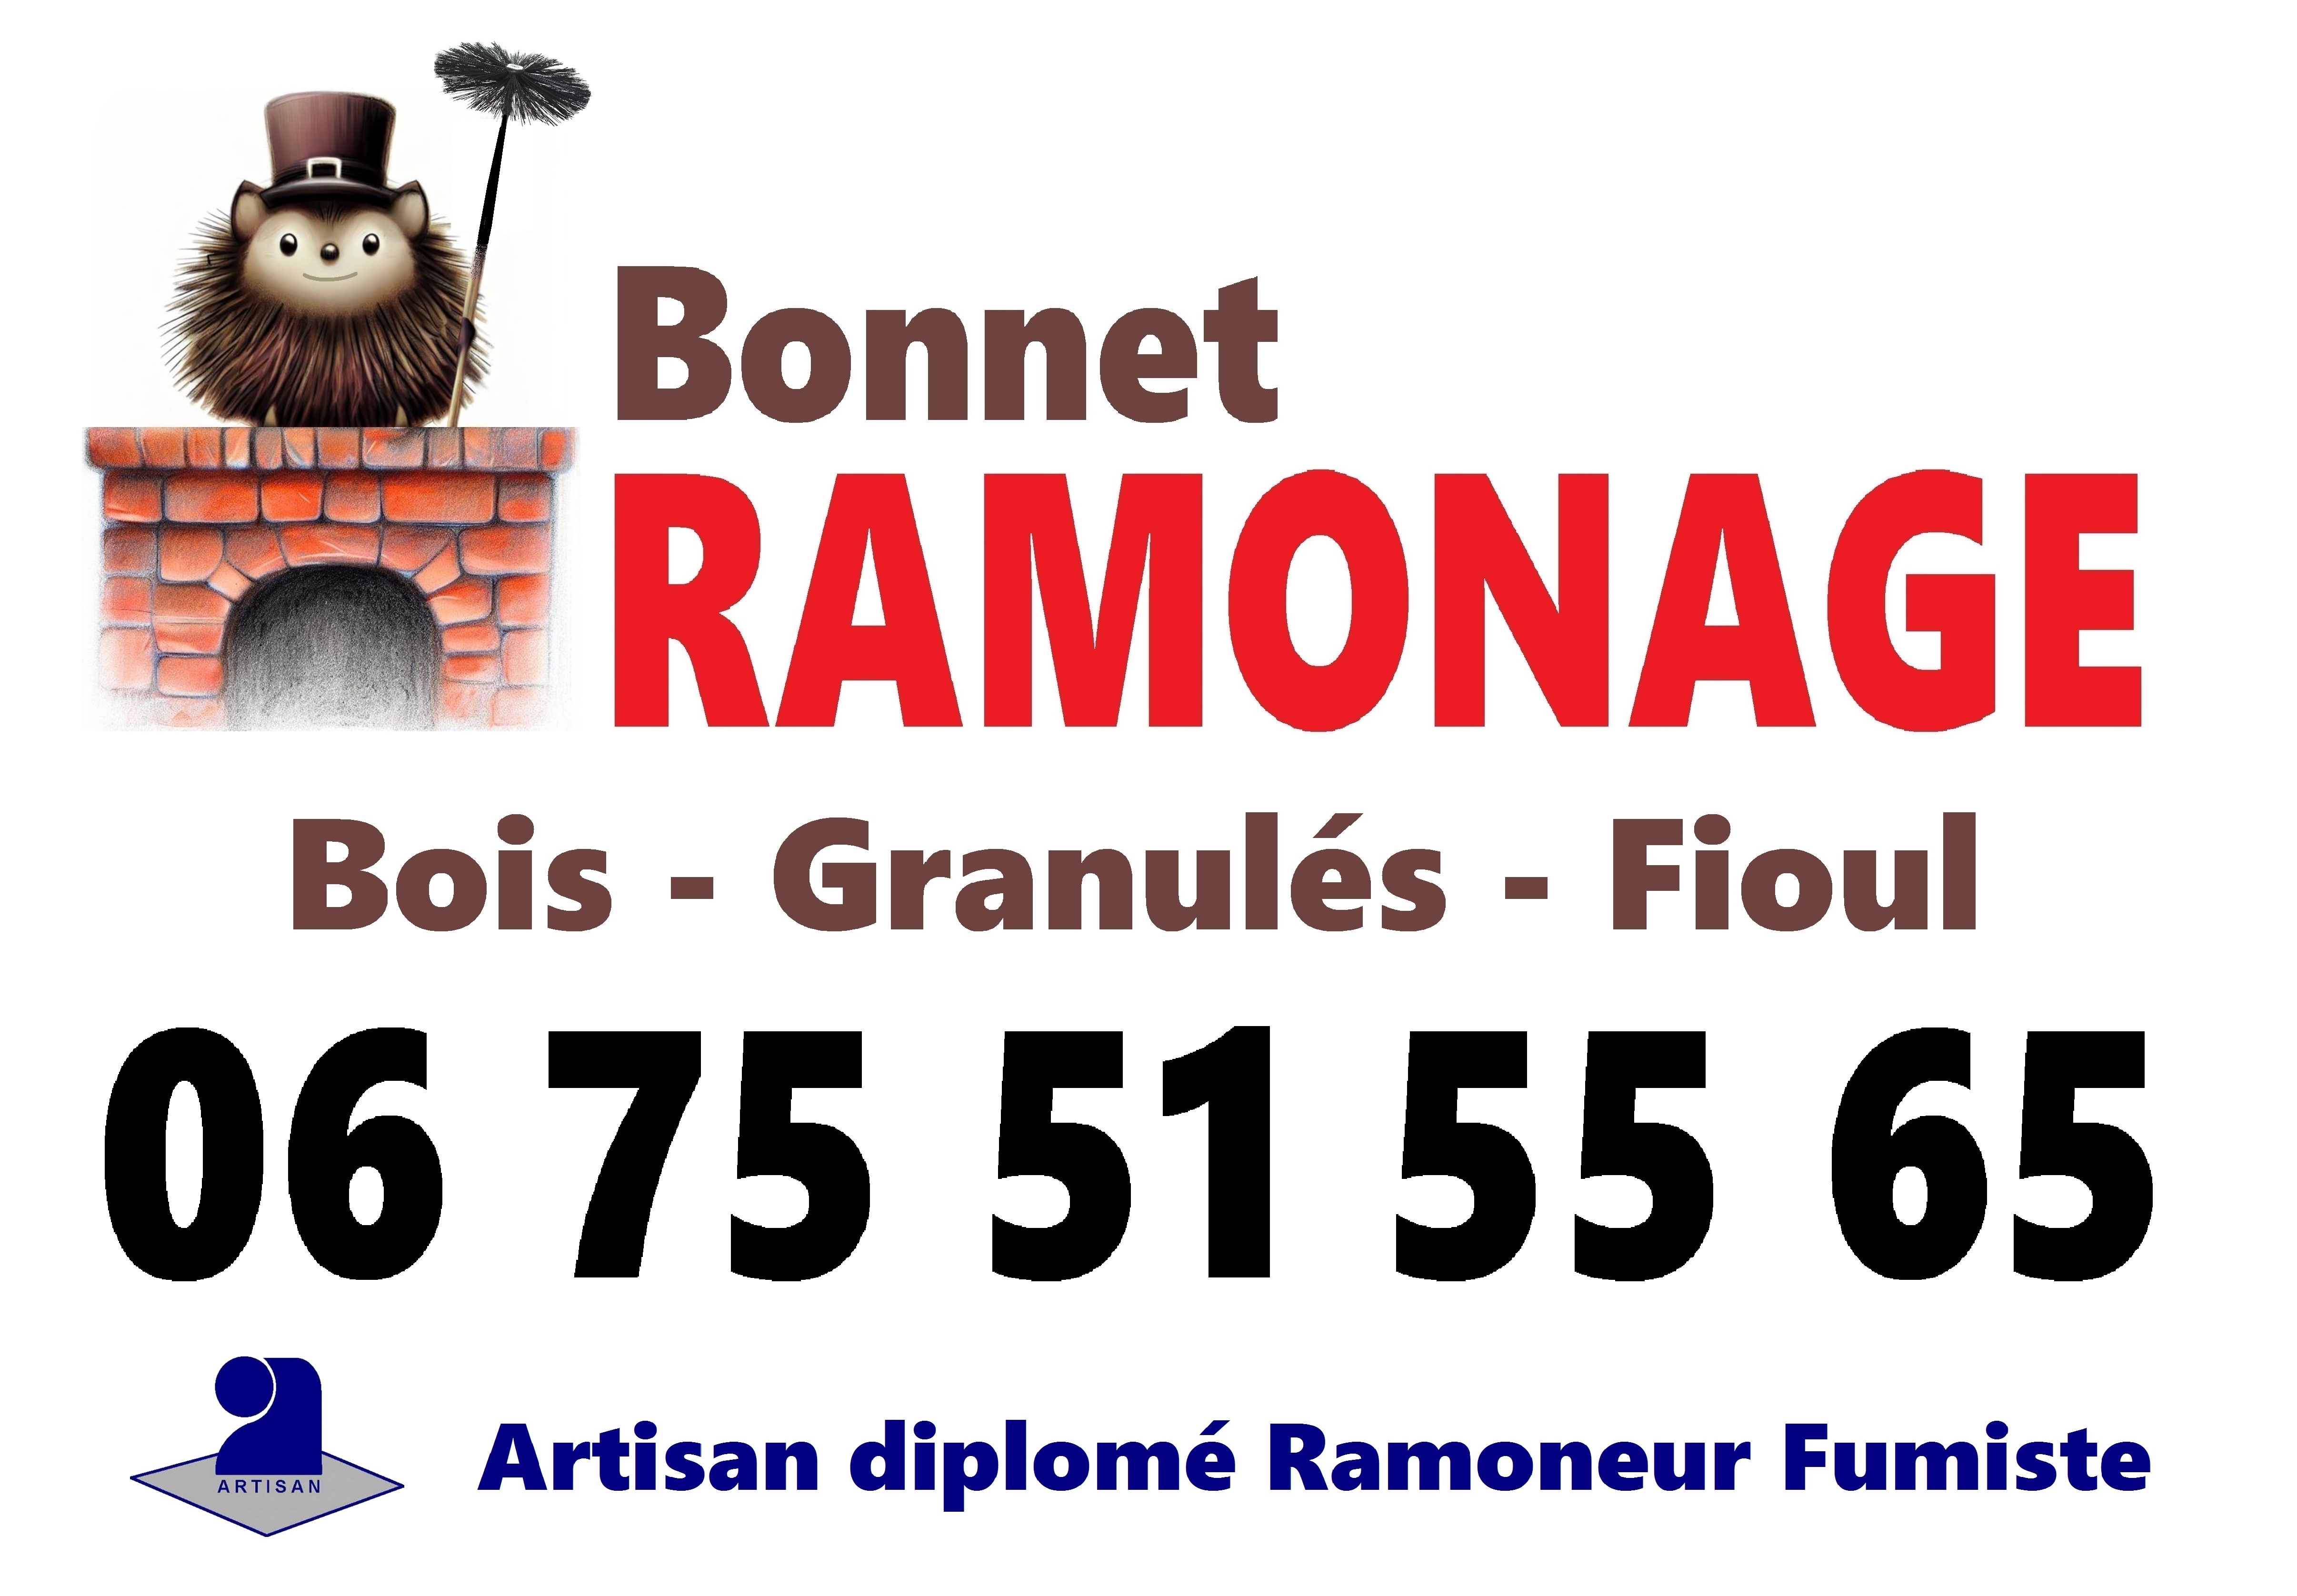 Bonnet Ramonage 